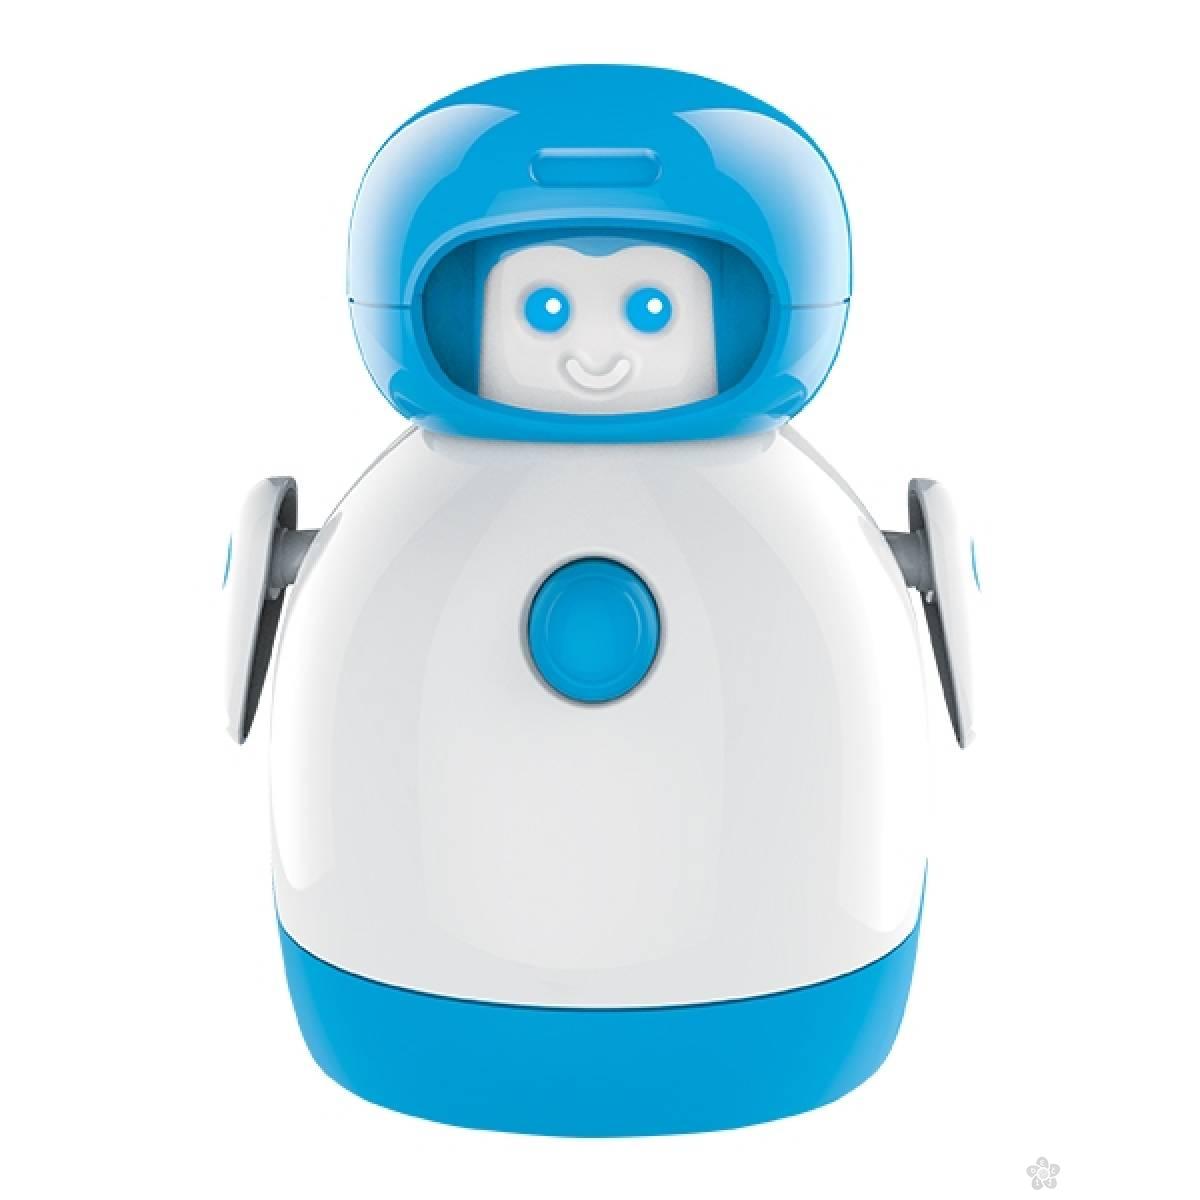 ROBO CHRIS - Moj robot za prvo programiranje 20585 